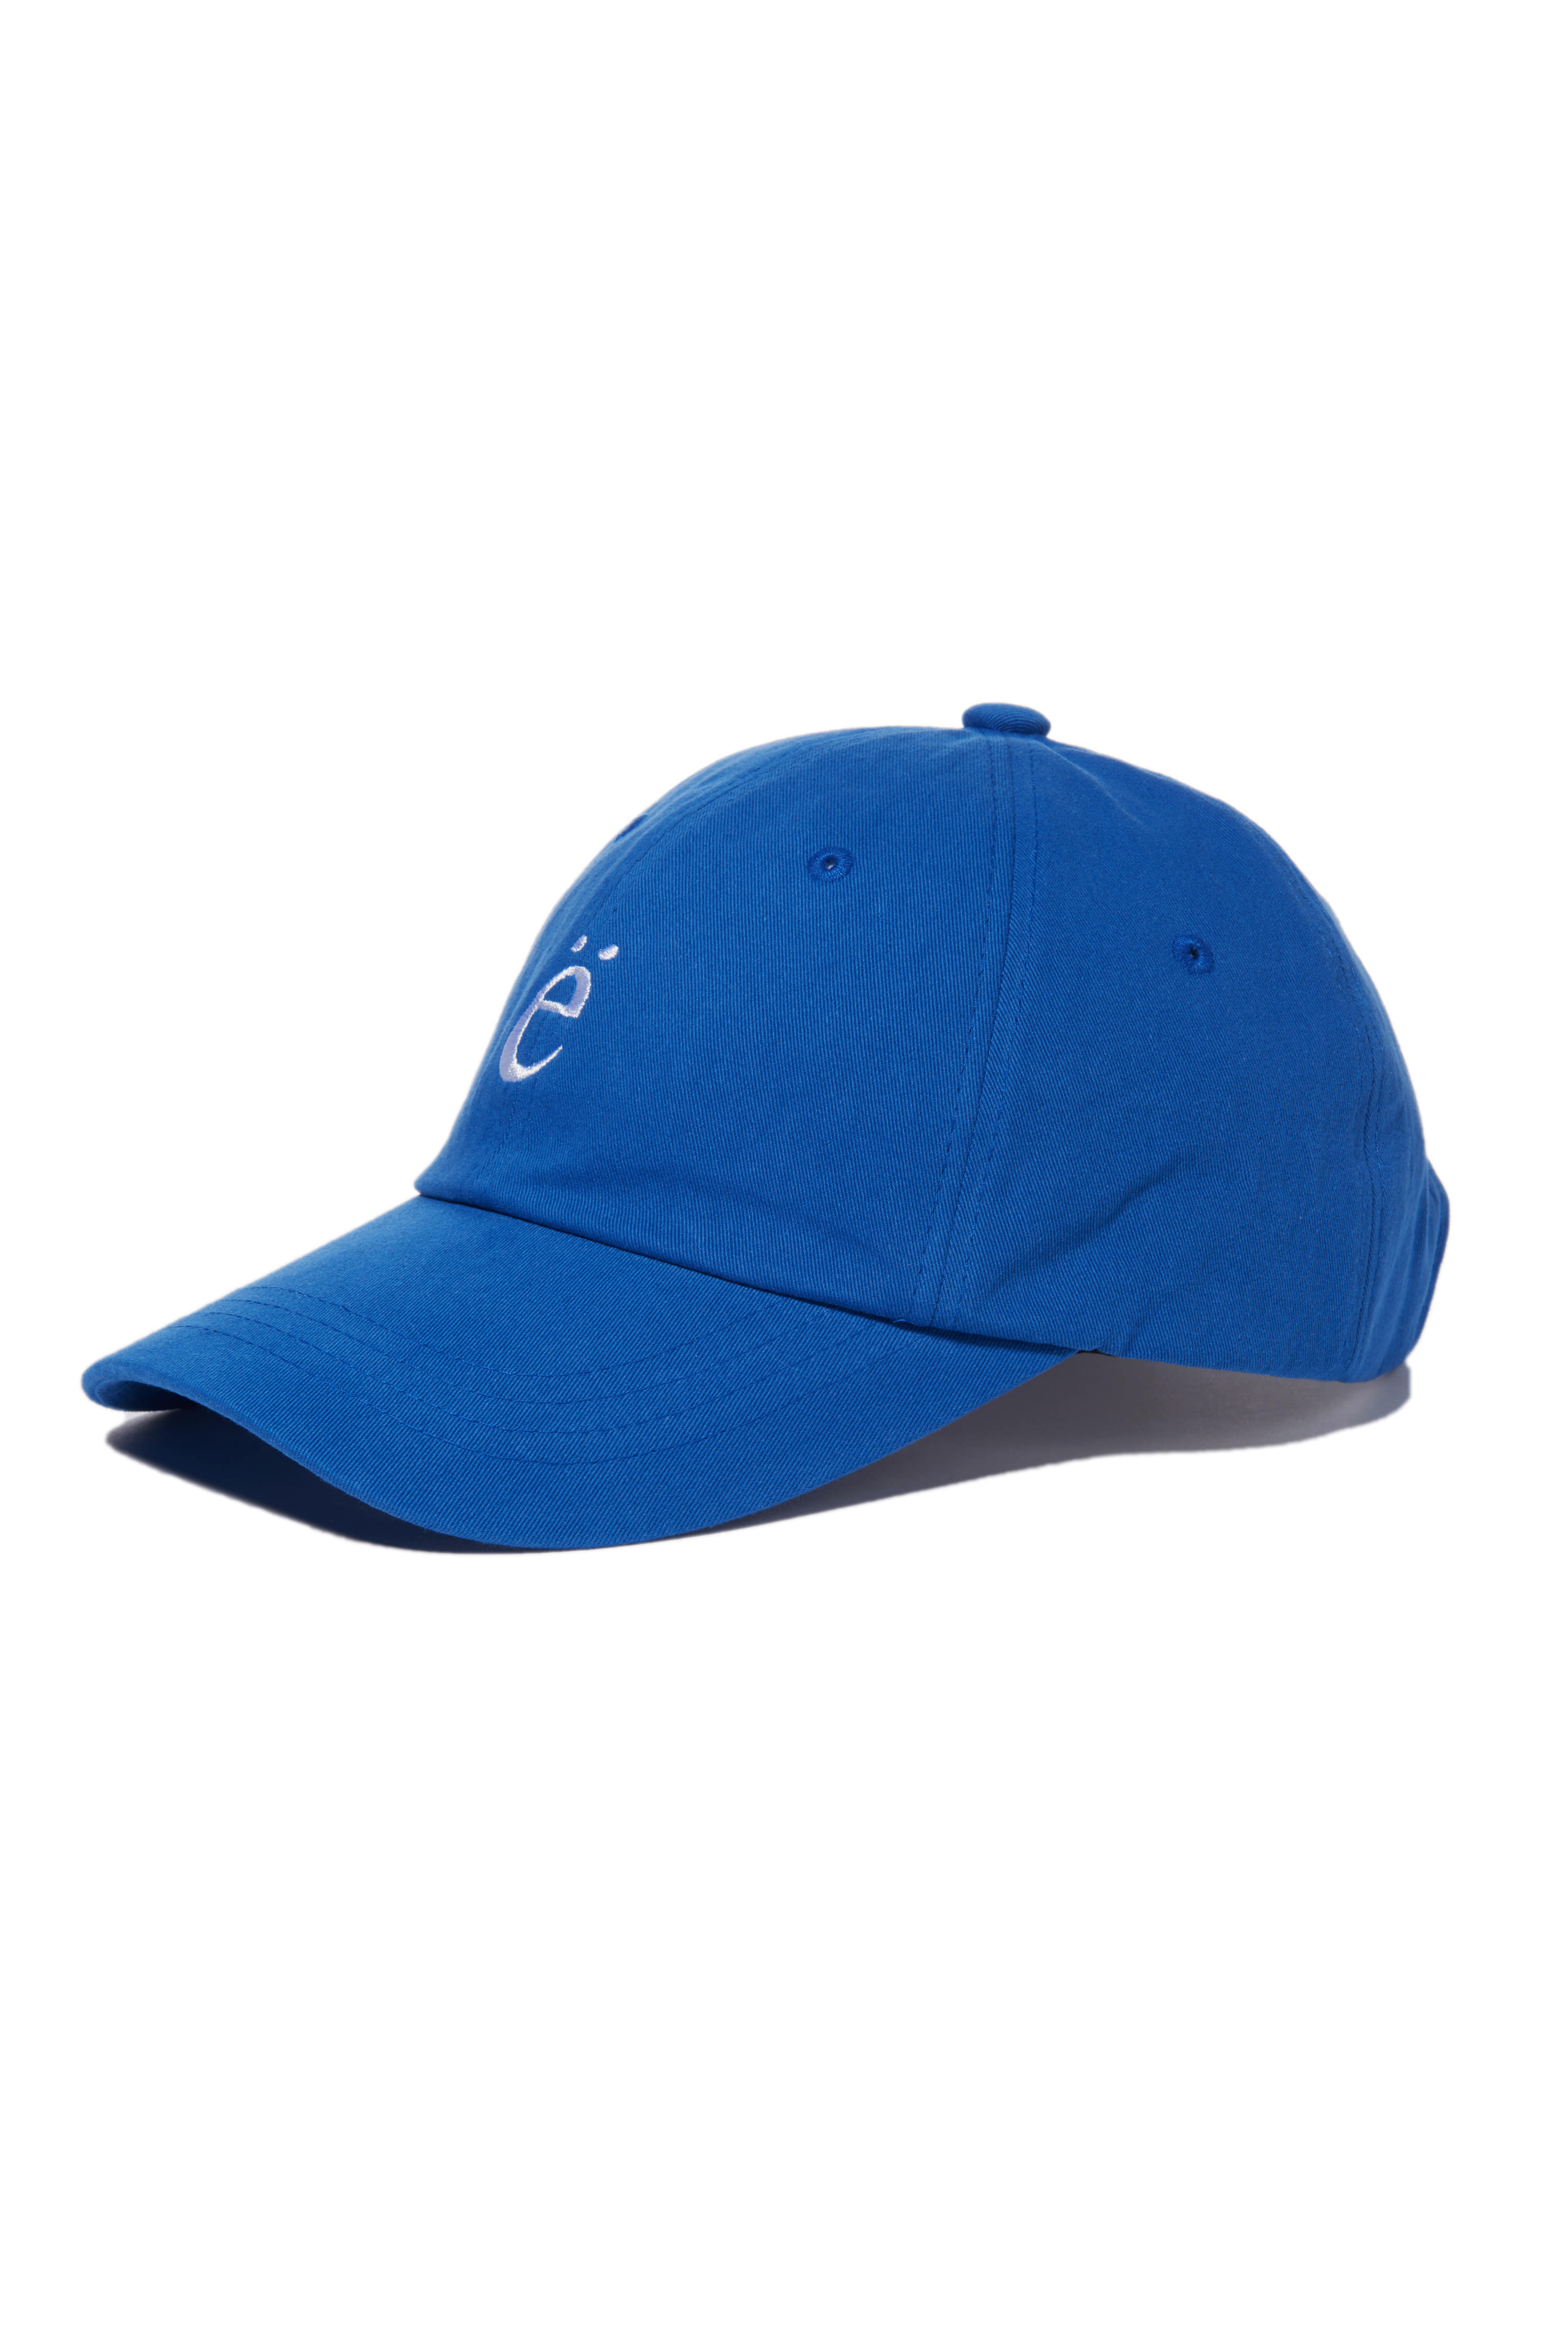 e _ LOGO EMIS CAP-BLUE